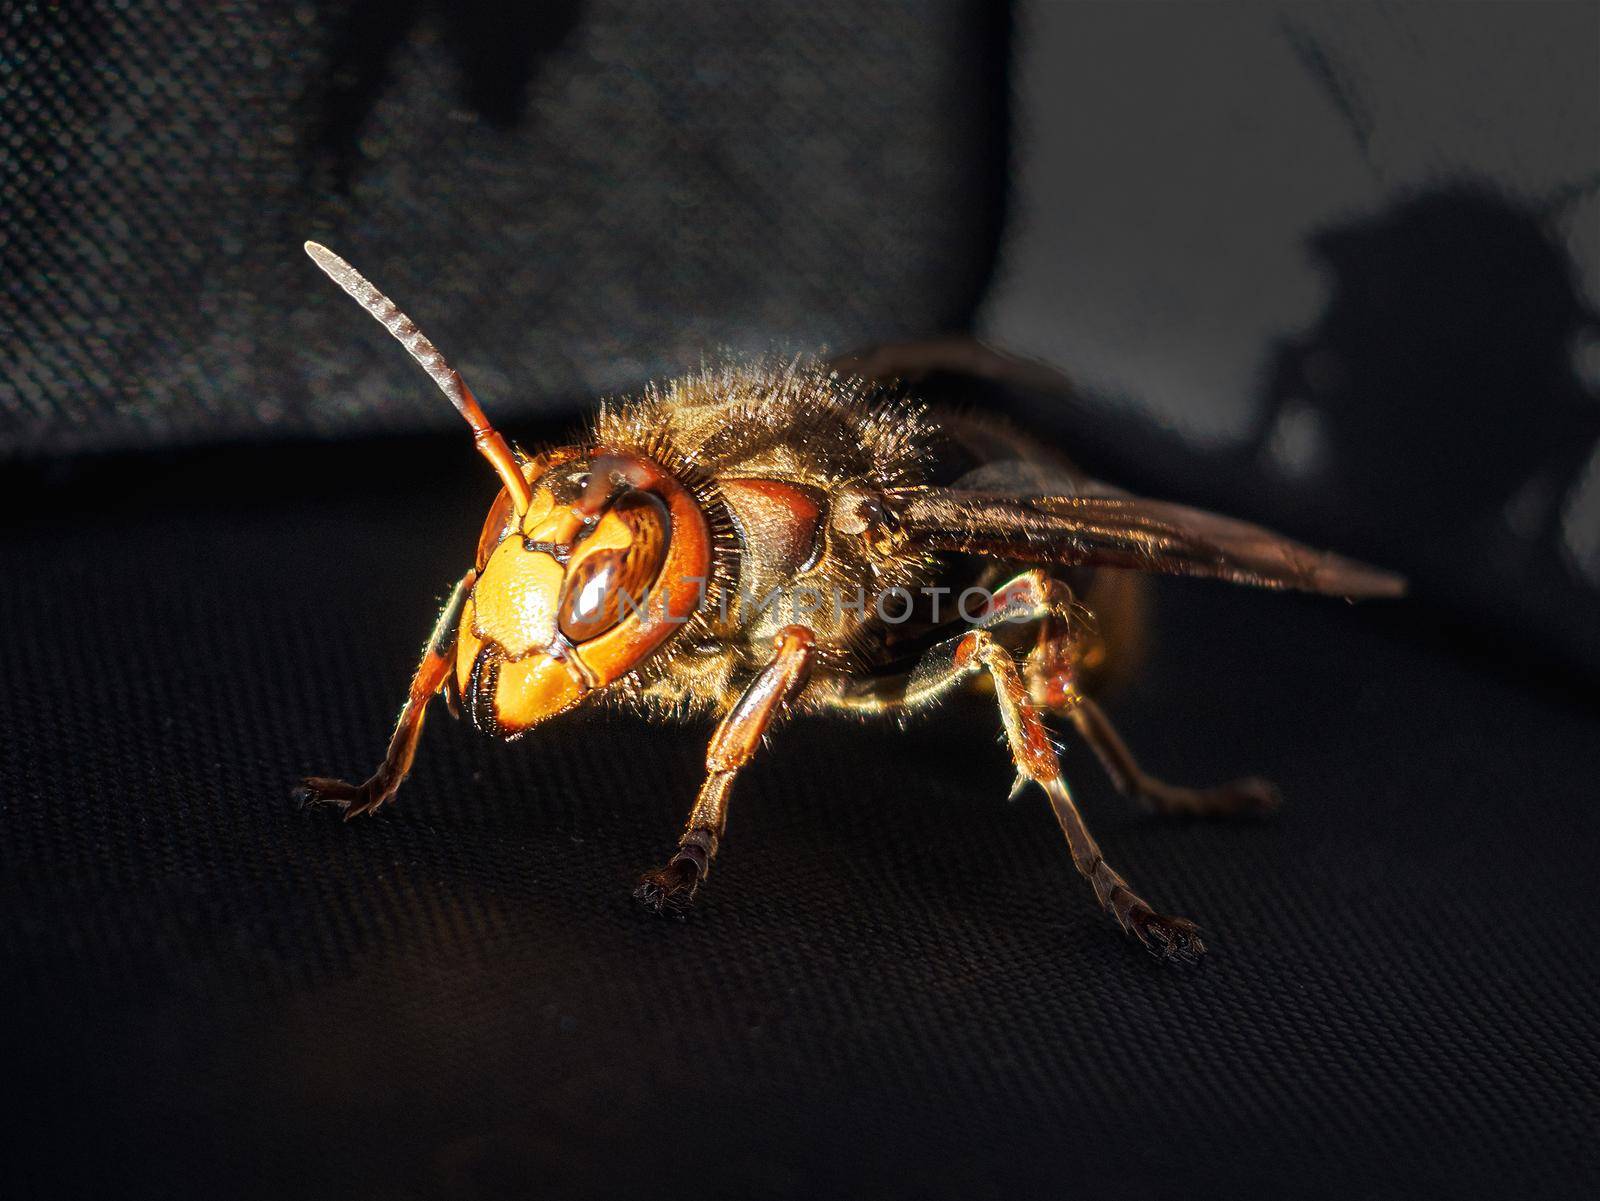 European hornet close-up on a dark background.